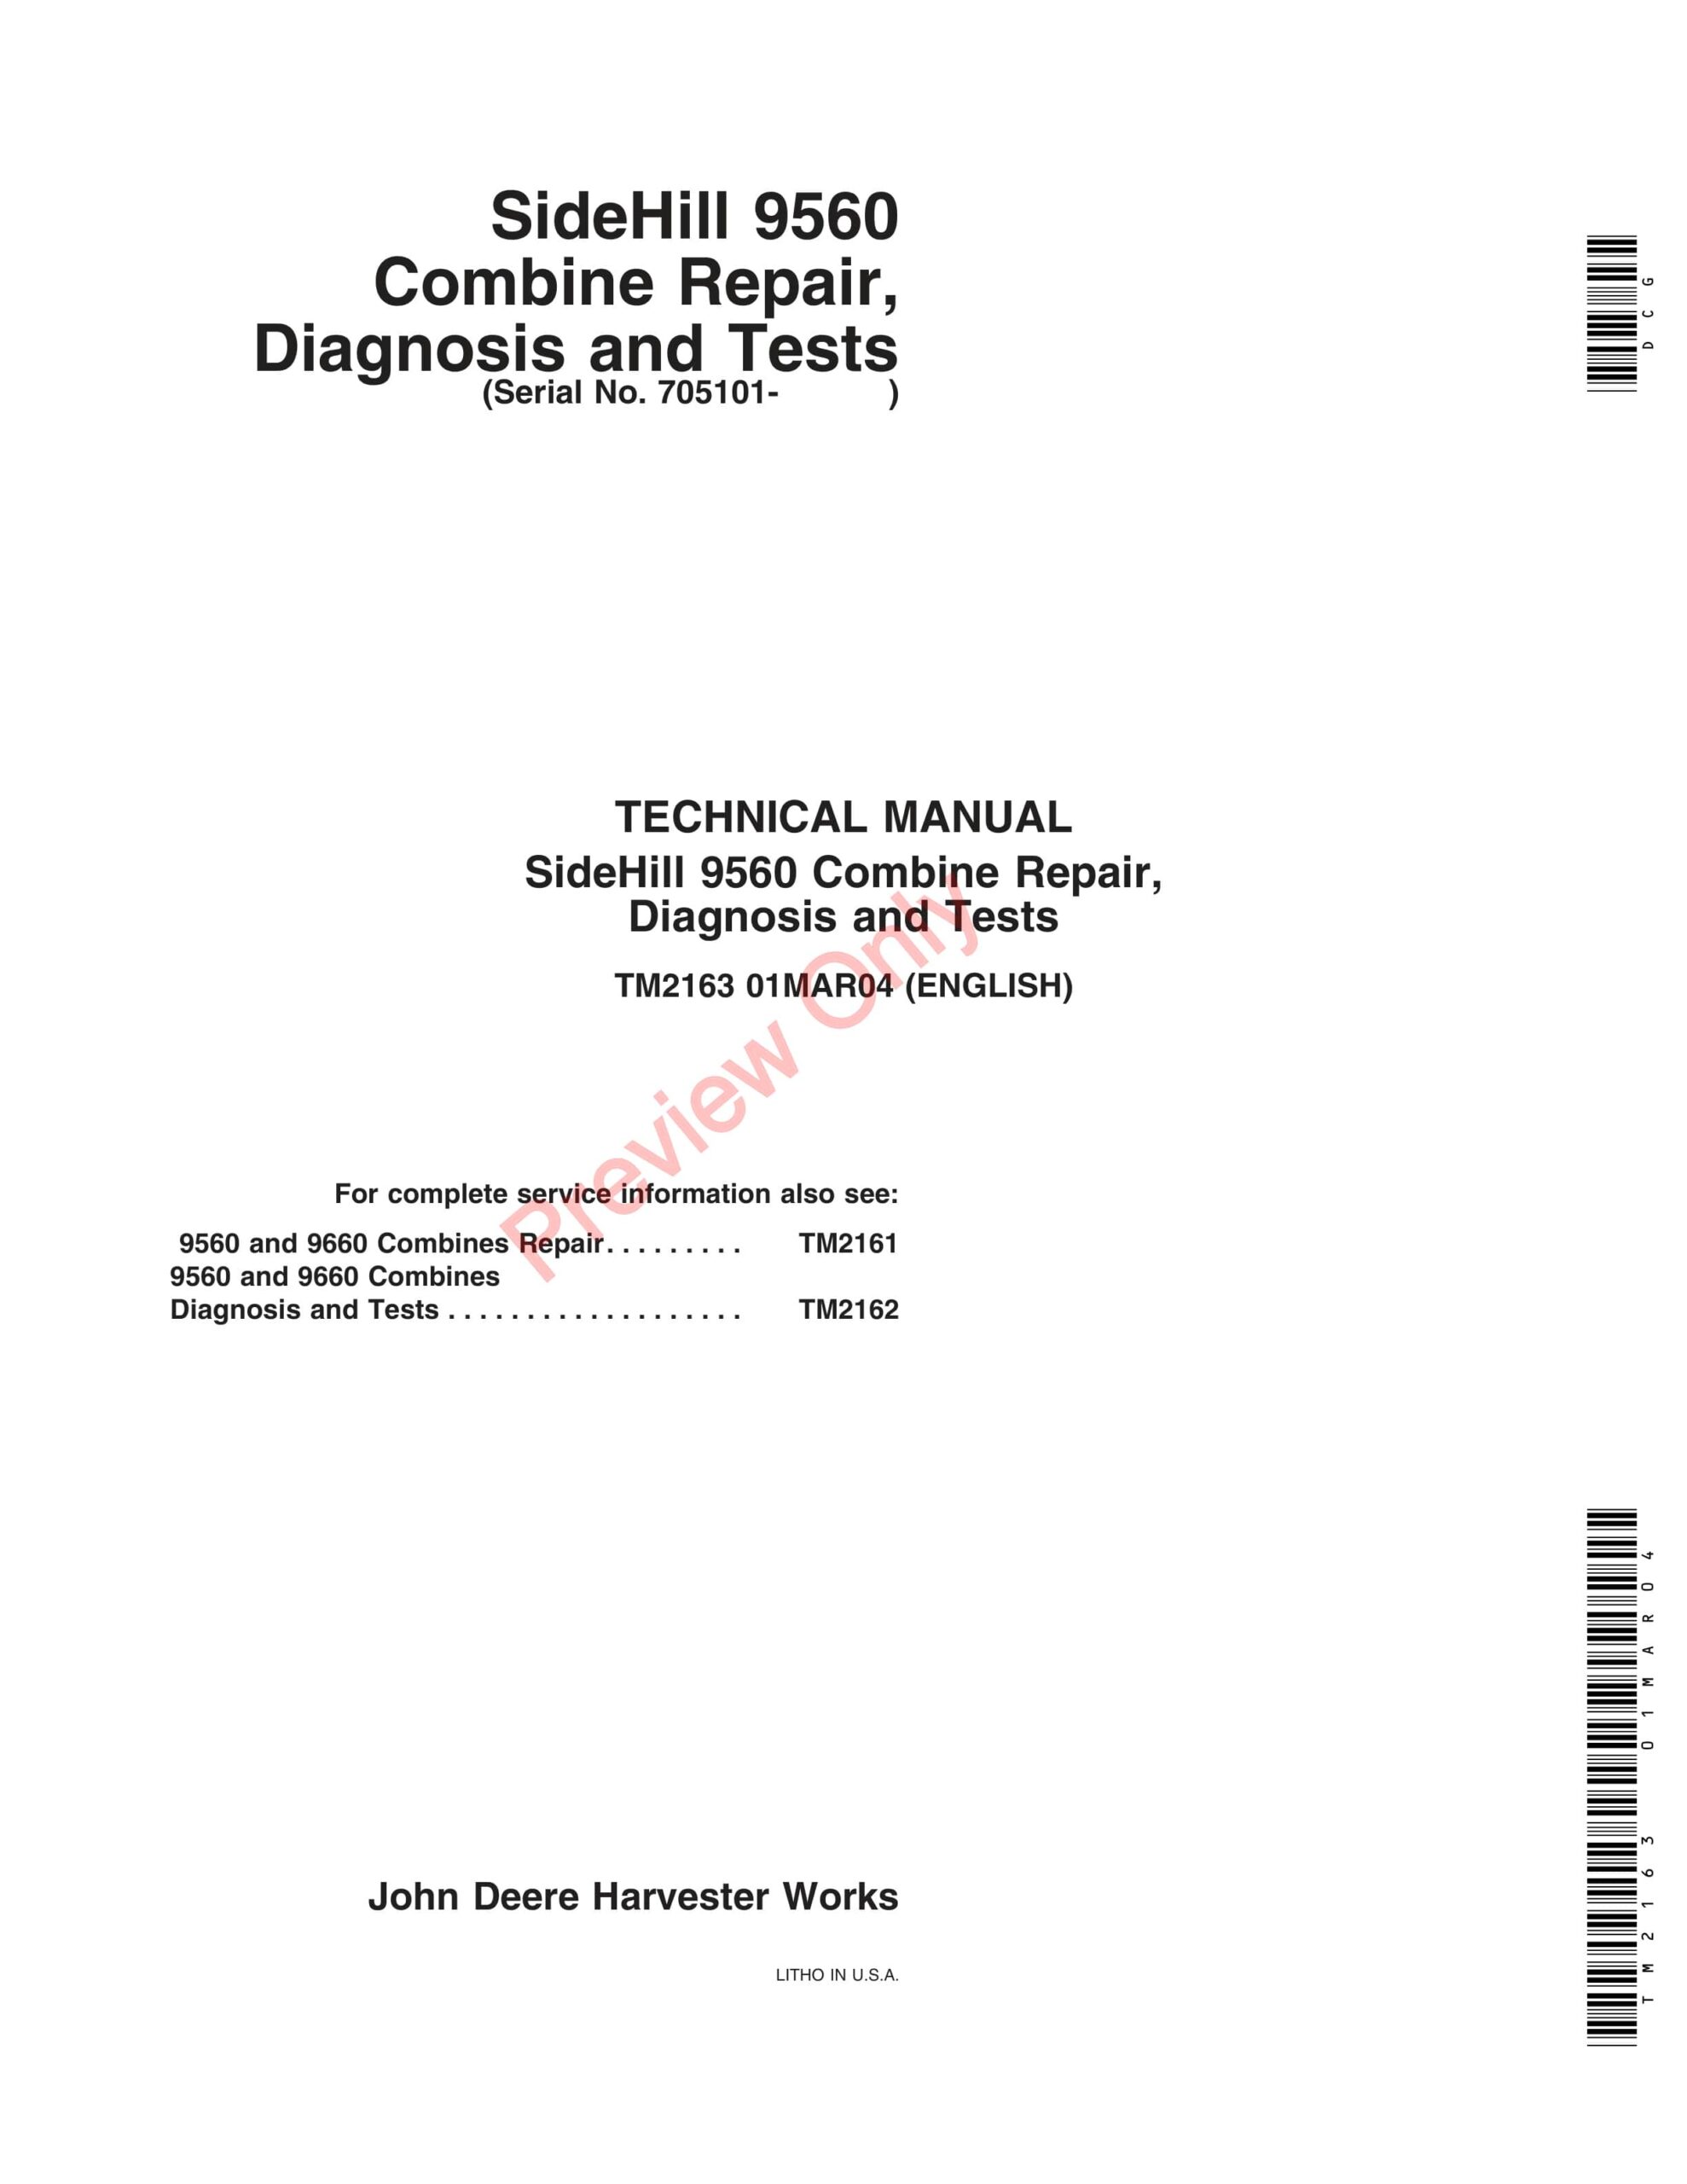 John Deere 9650SH Combine (705101-) Technical Manual TM2163 01MAR04-1